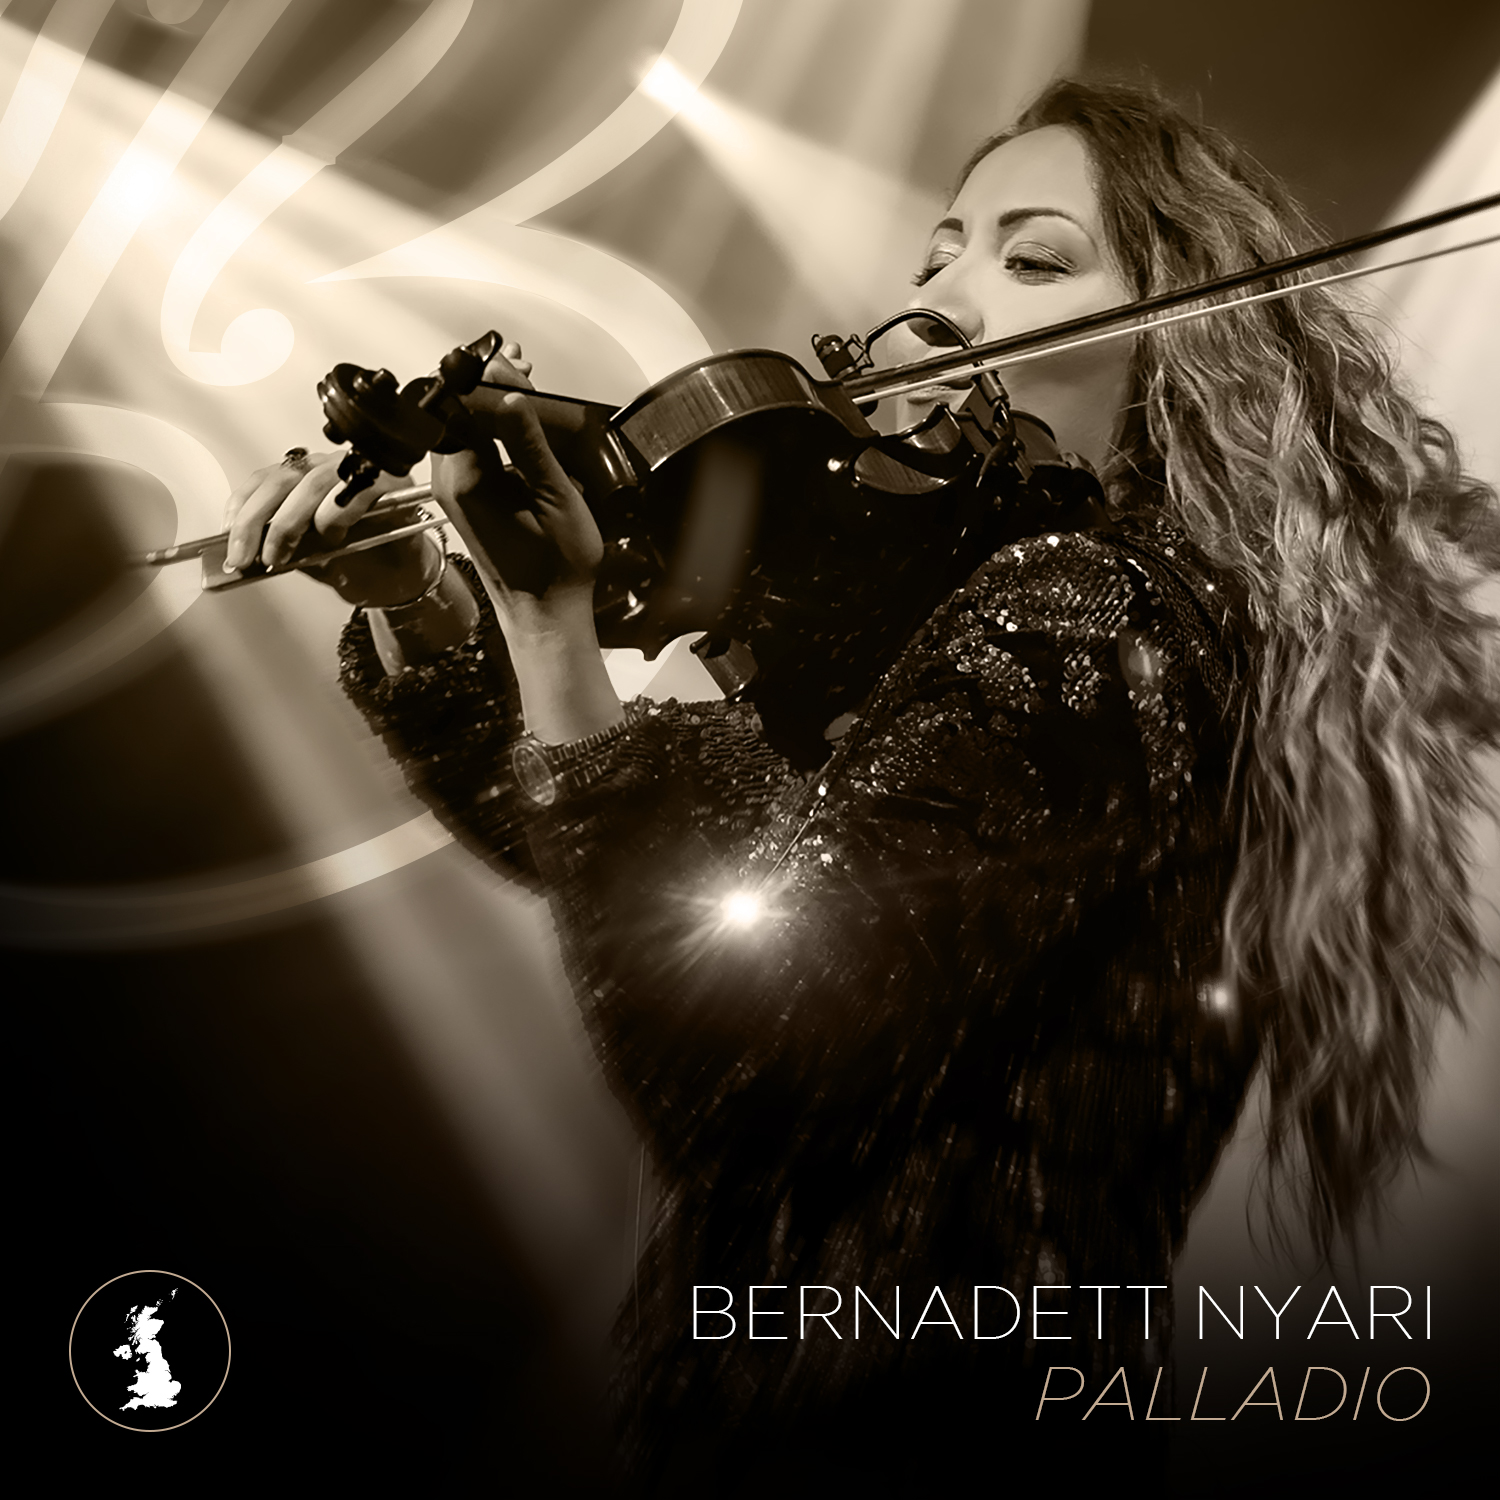 A renowned Ace Violinist Bernadett Nyari Champions Women In Single & Video “Palladio”.